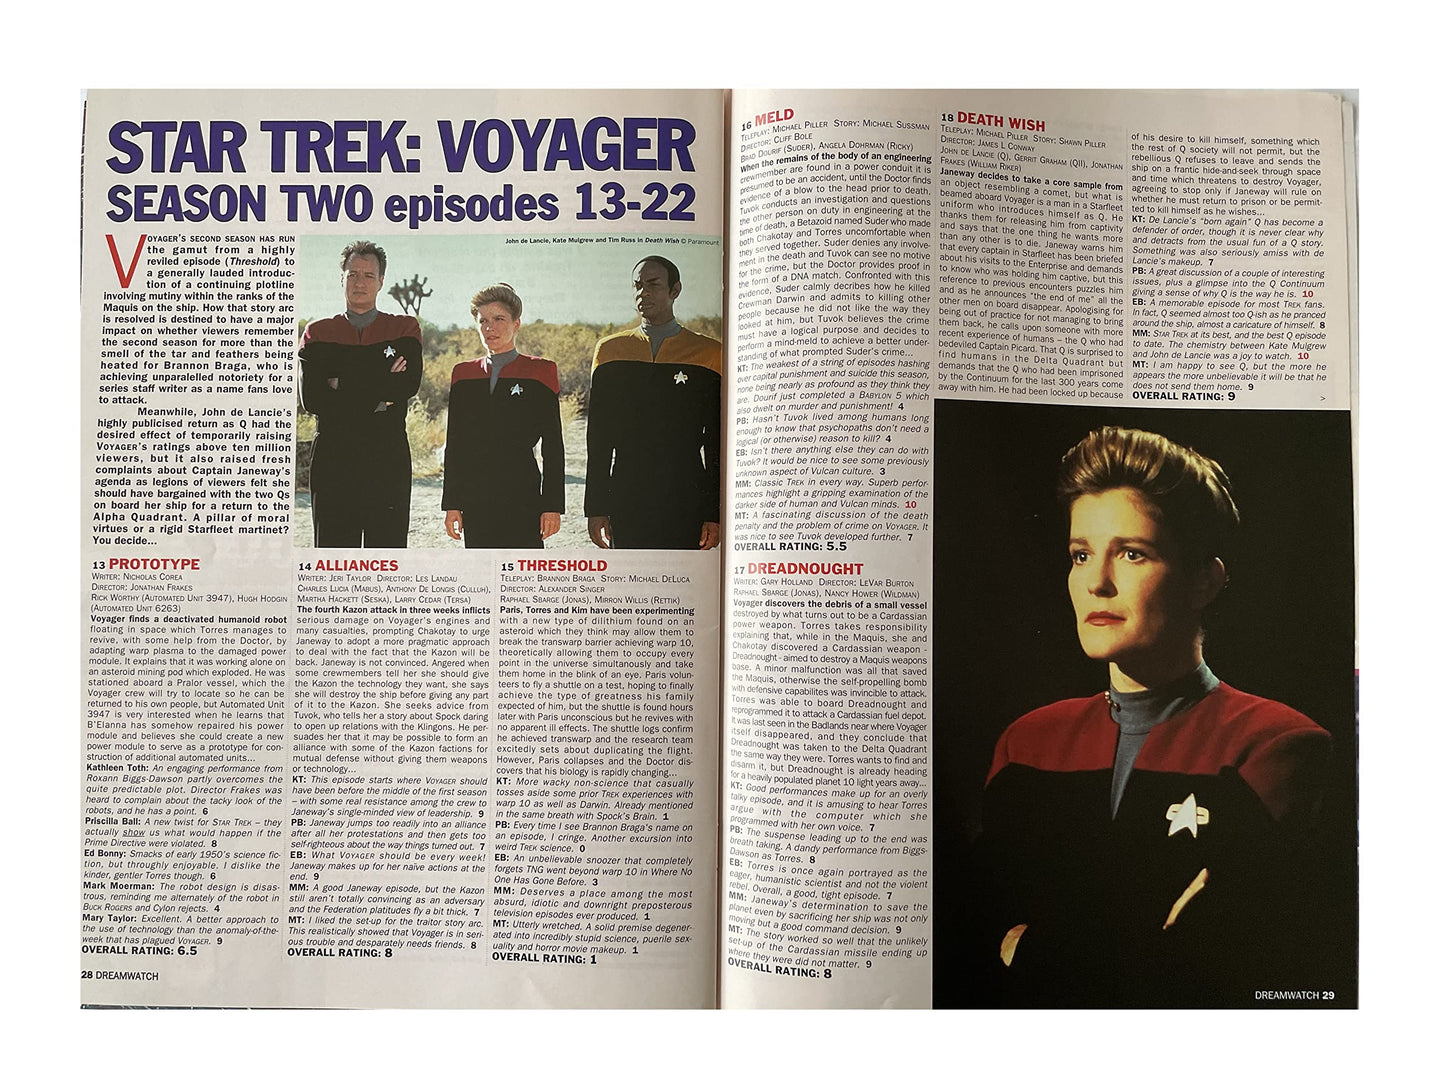 Vintage 1996 Star Trek Happy Birthday 30th Anniversary - Dreamwatch Supplement Magazine With Poster - Shop Stock Room Find